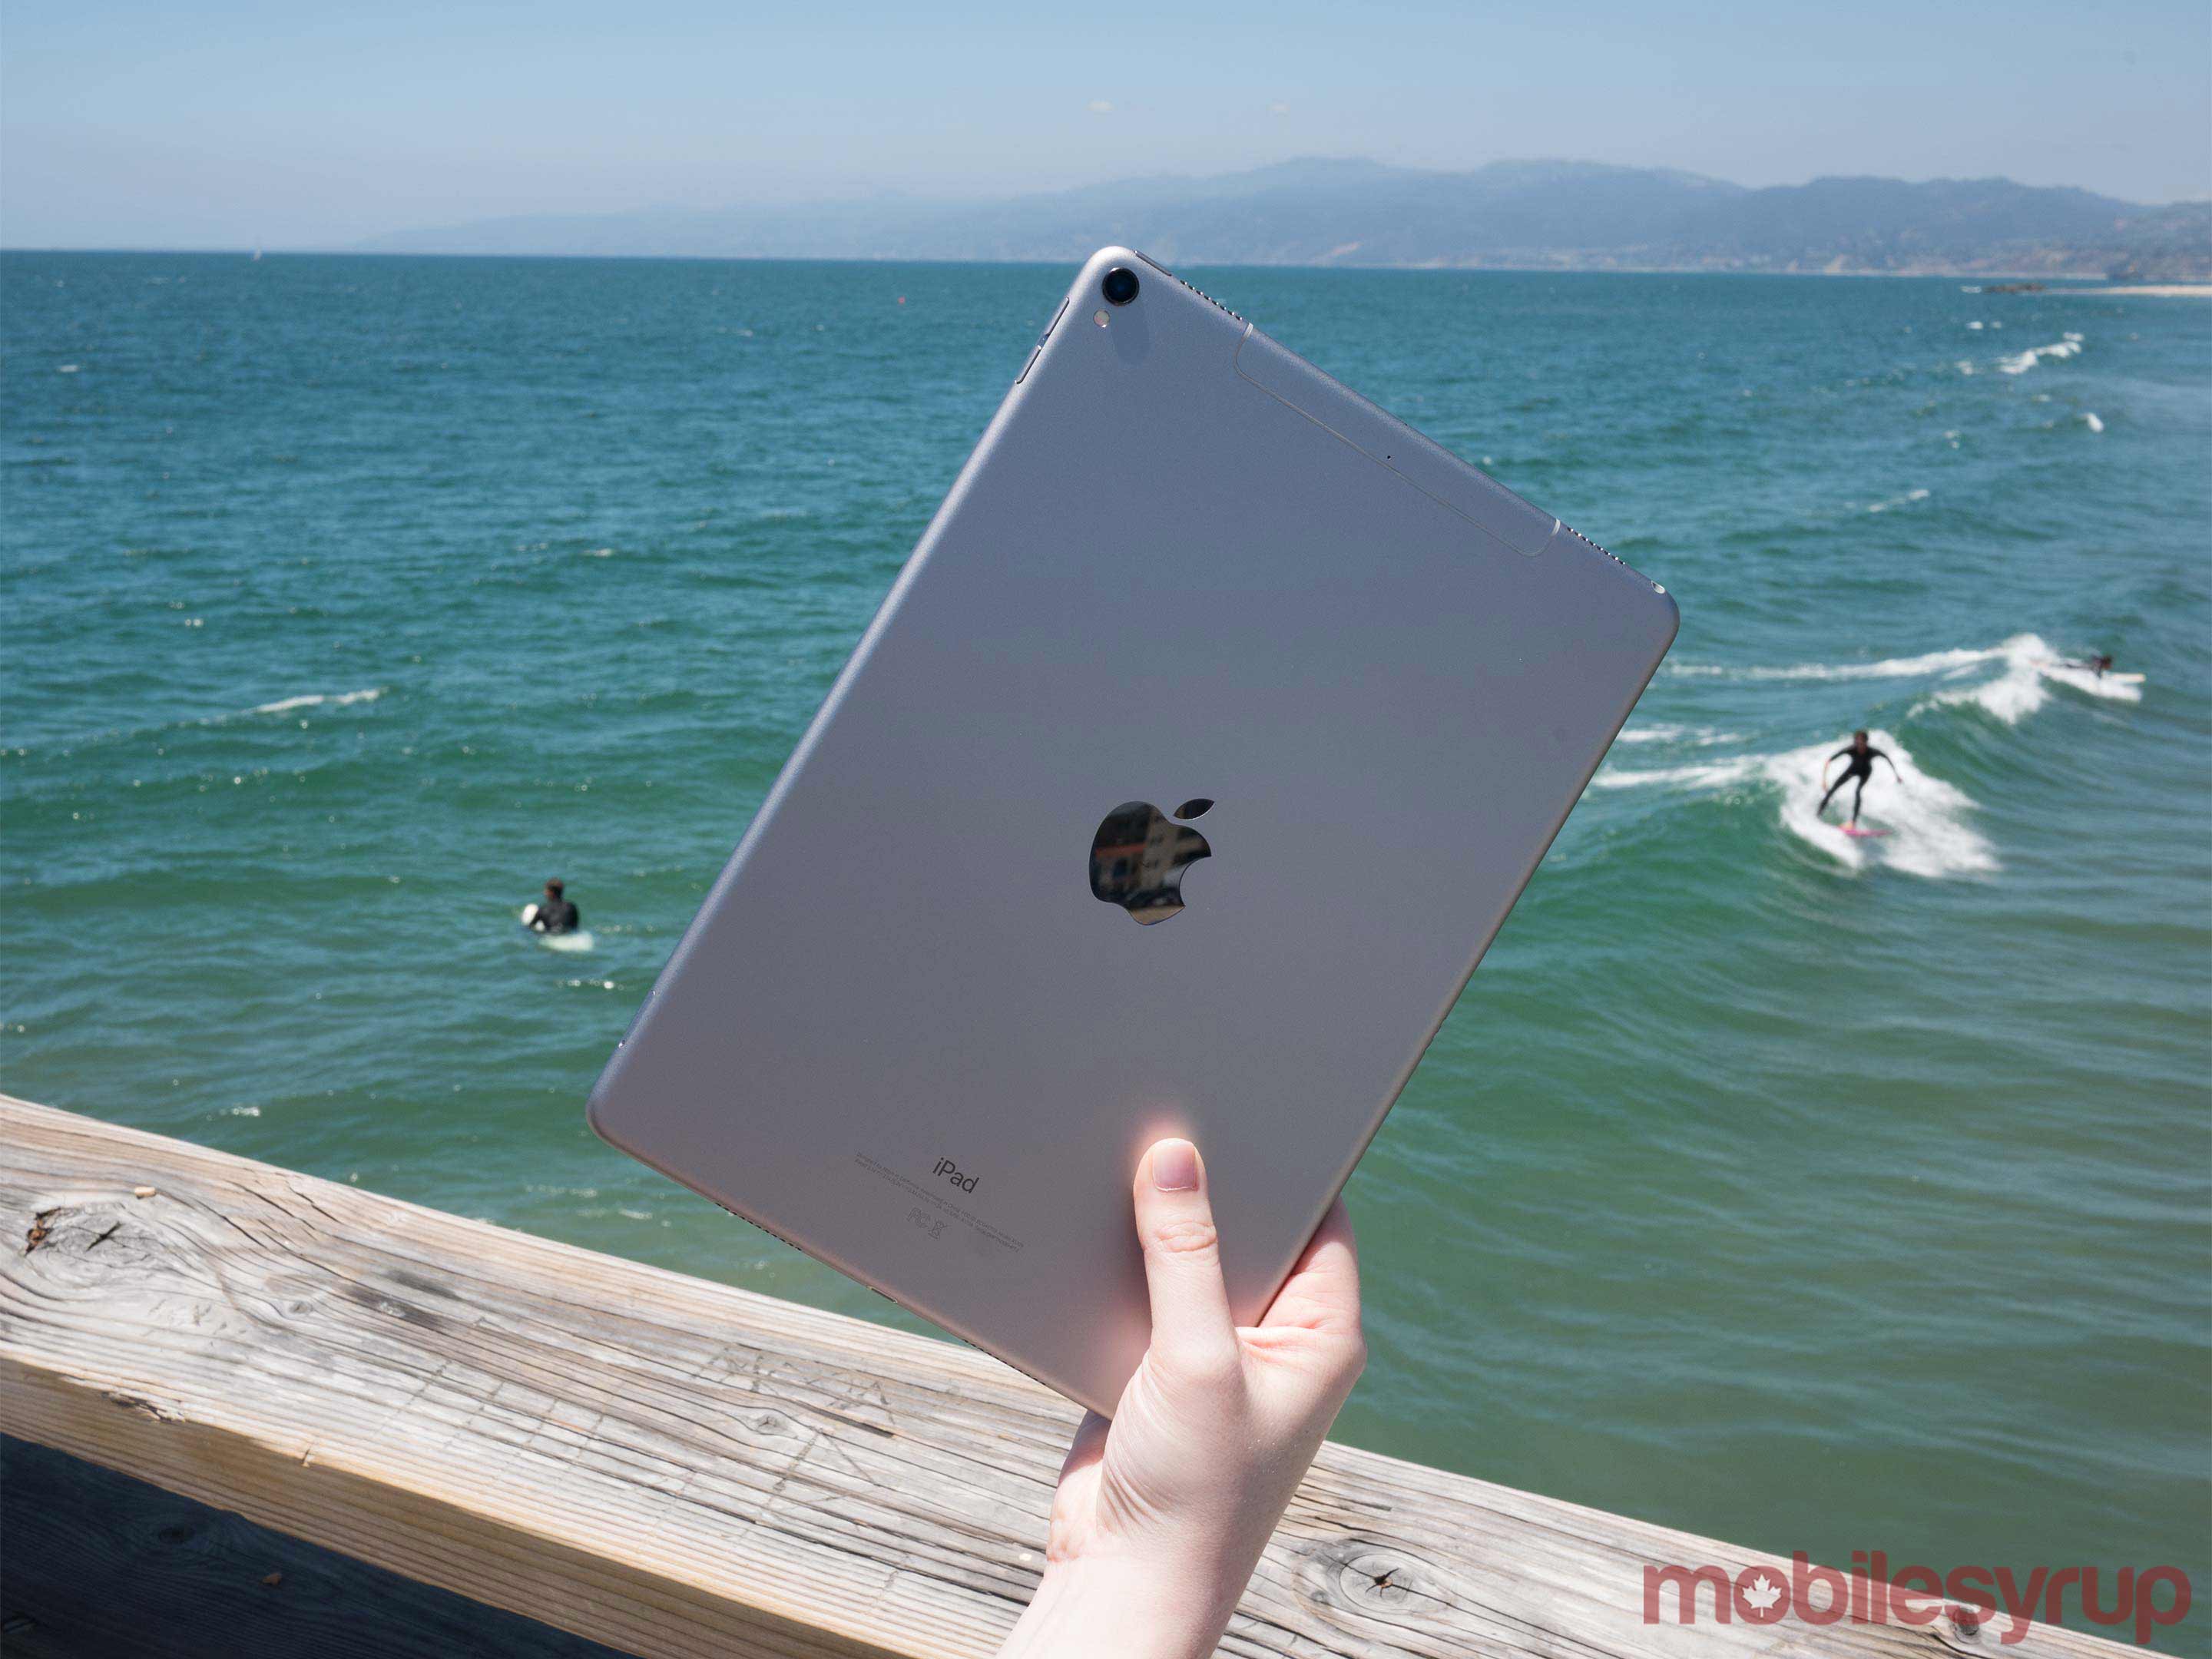 10-5-inch iPad Pro back